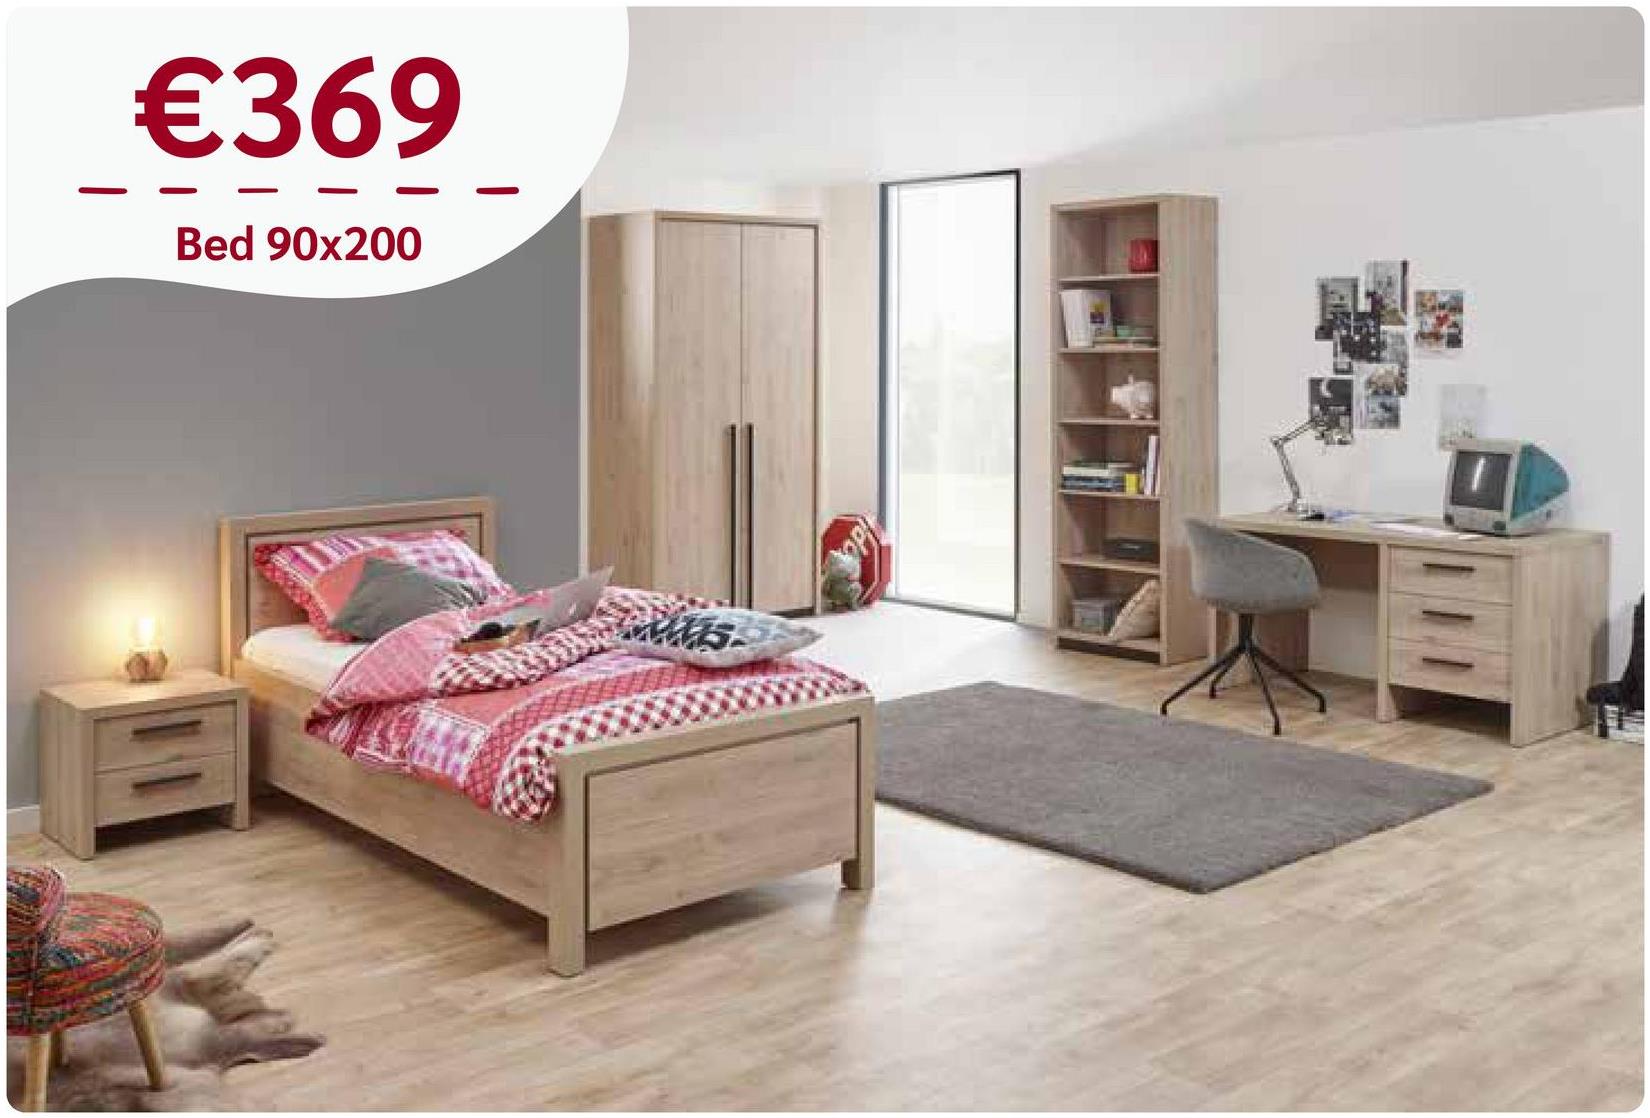 €369
Bed 90x200